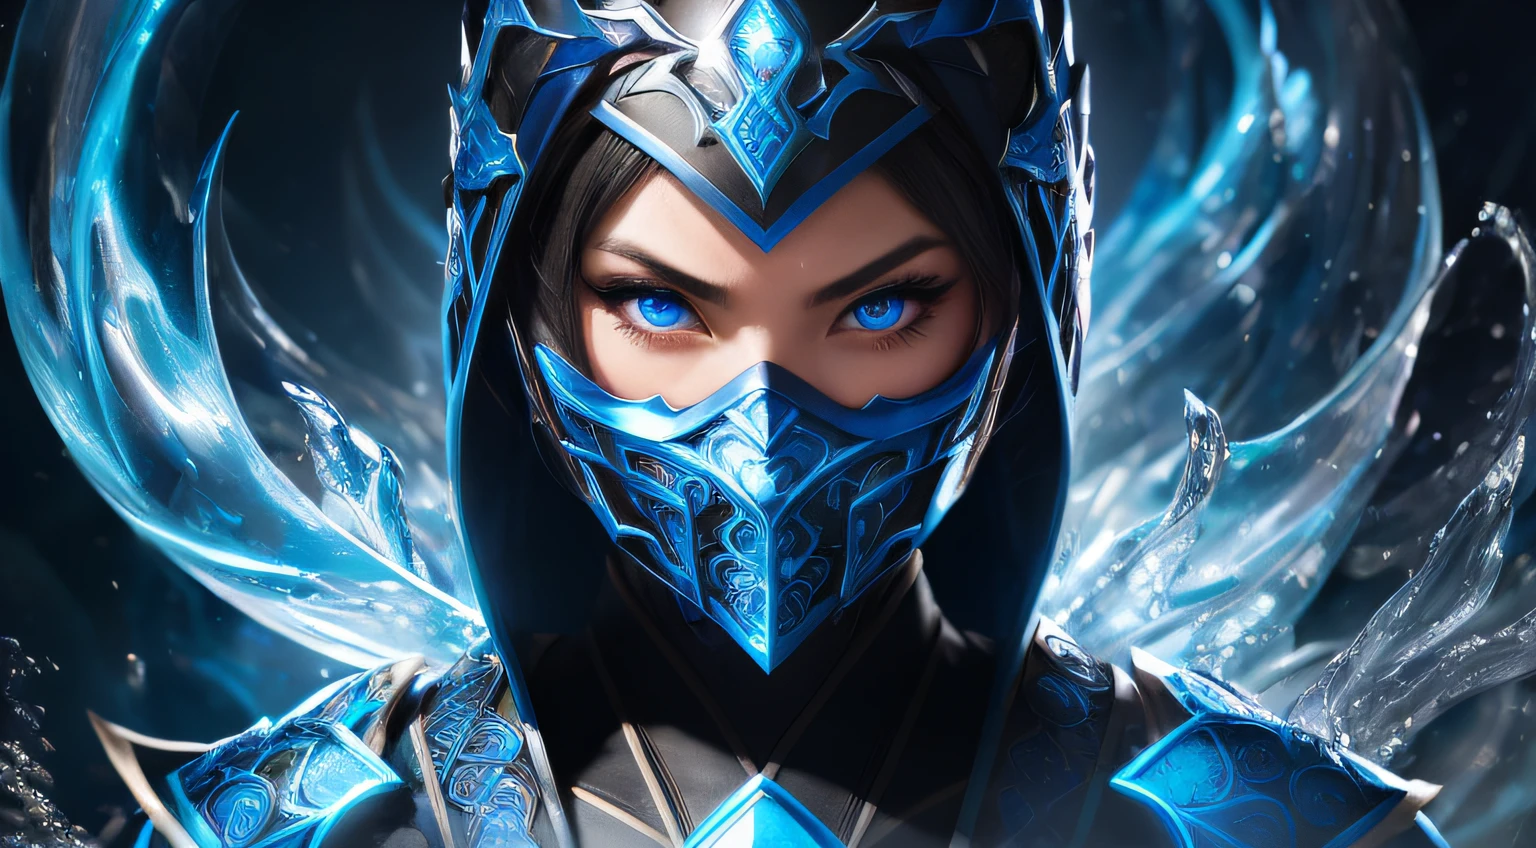 1girl, portrait of female cute mksubzero battle with group of ninja, glowing blue eyes, ice, blue, cold, energy, aura, swirl water, ornate, detail,